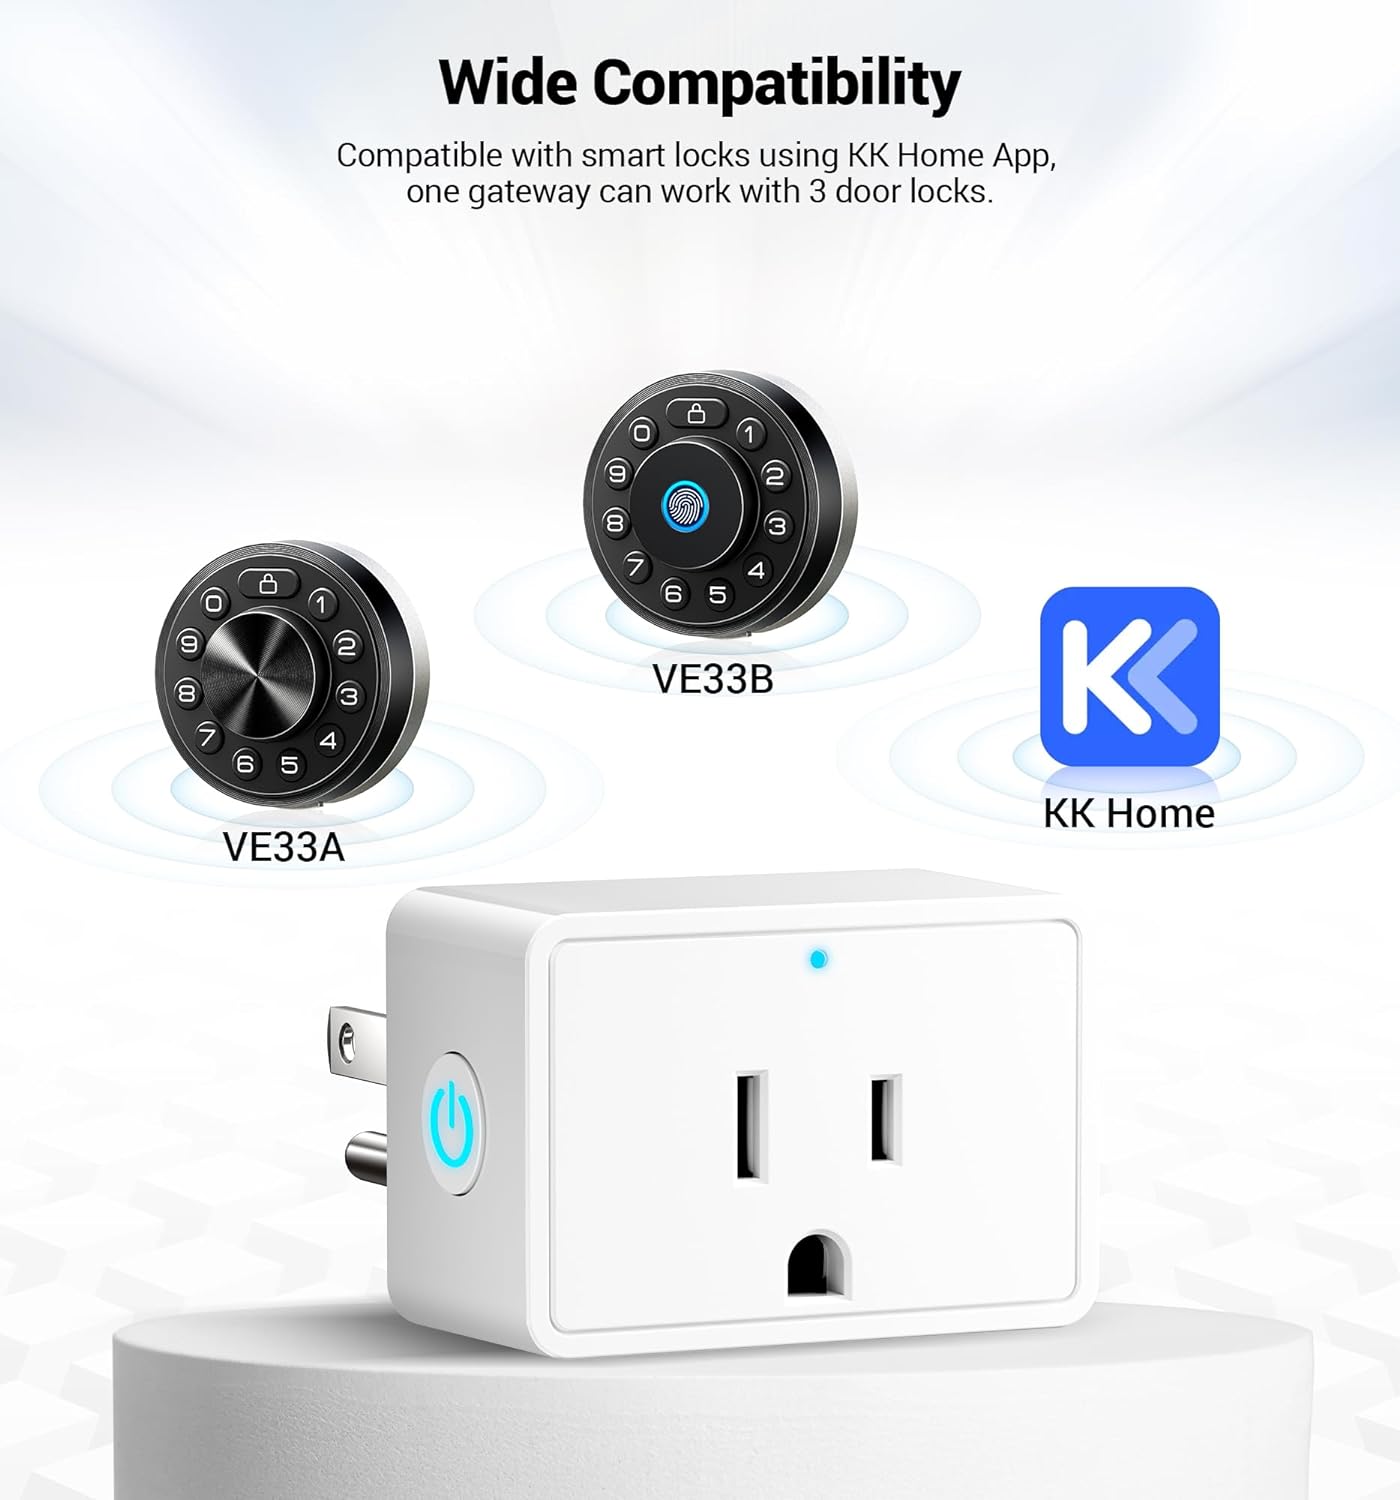 Veise G1 Gateway, Smart Door Lock WiFi Bridge for Remote Control, Voice Control, Compatible with KK Home APP for VE33A VE33B